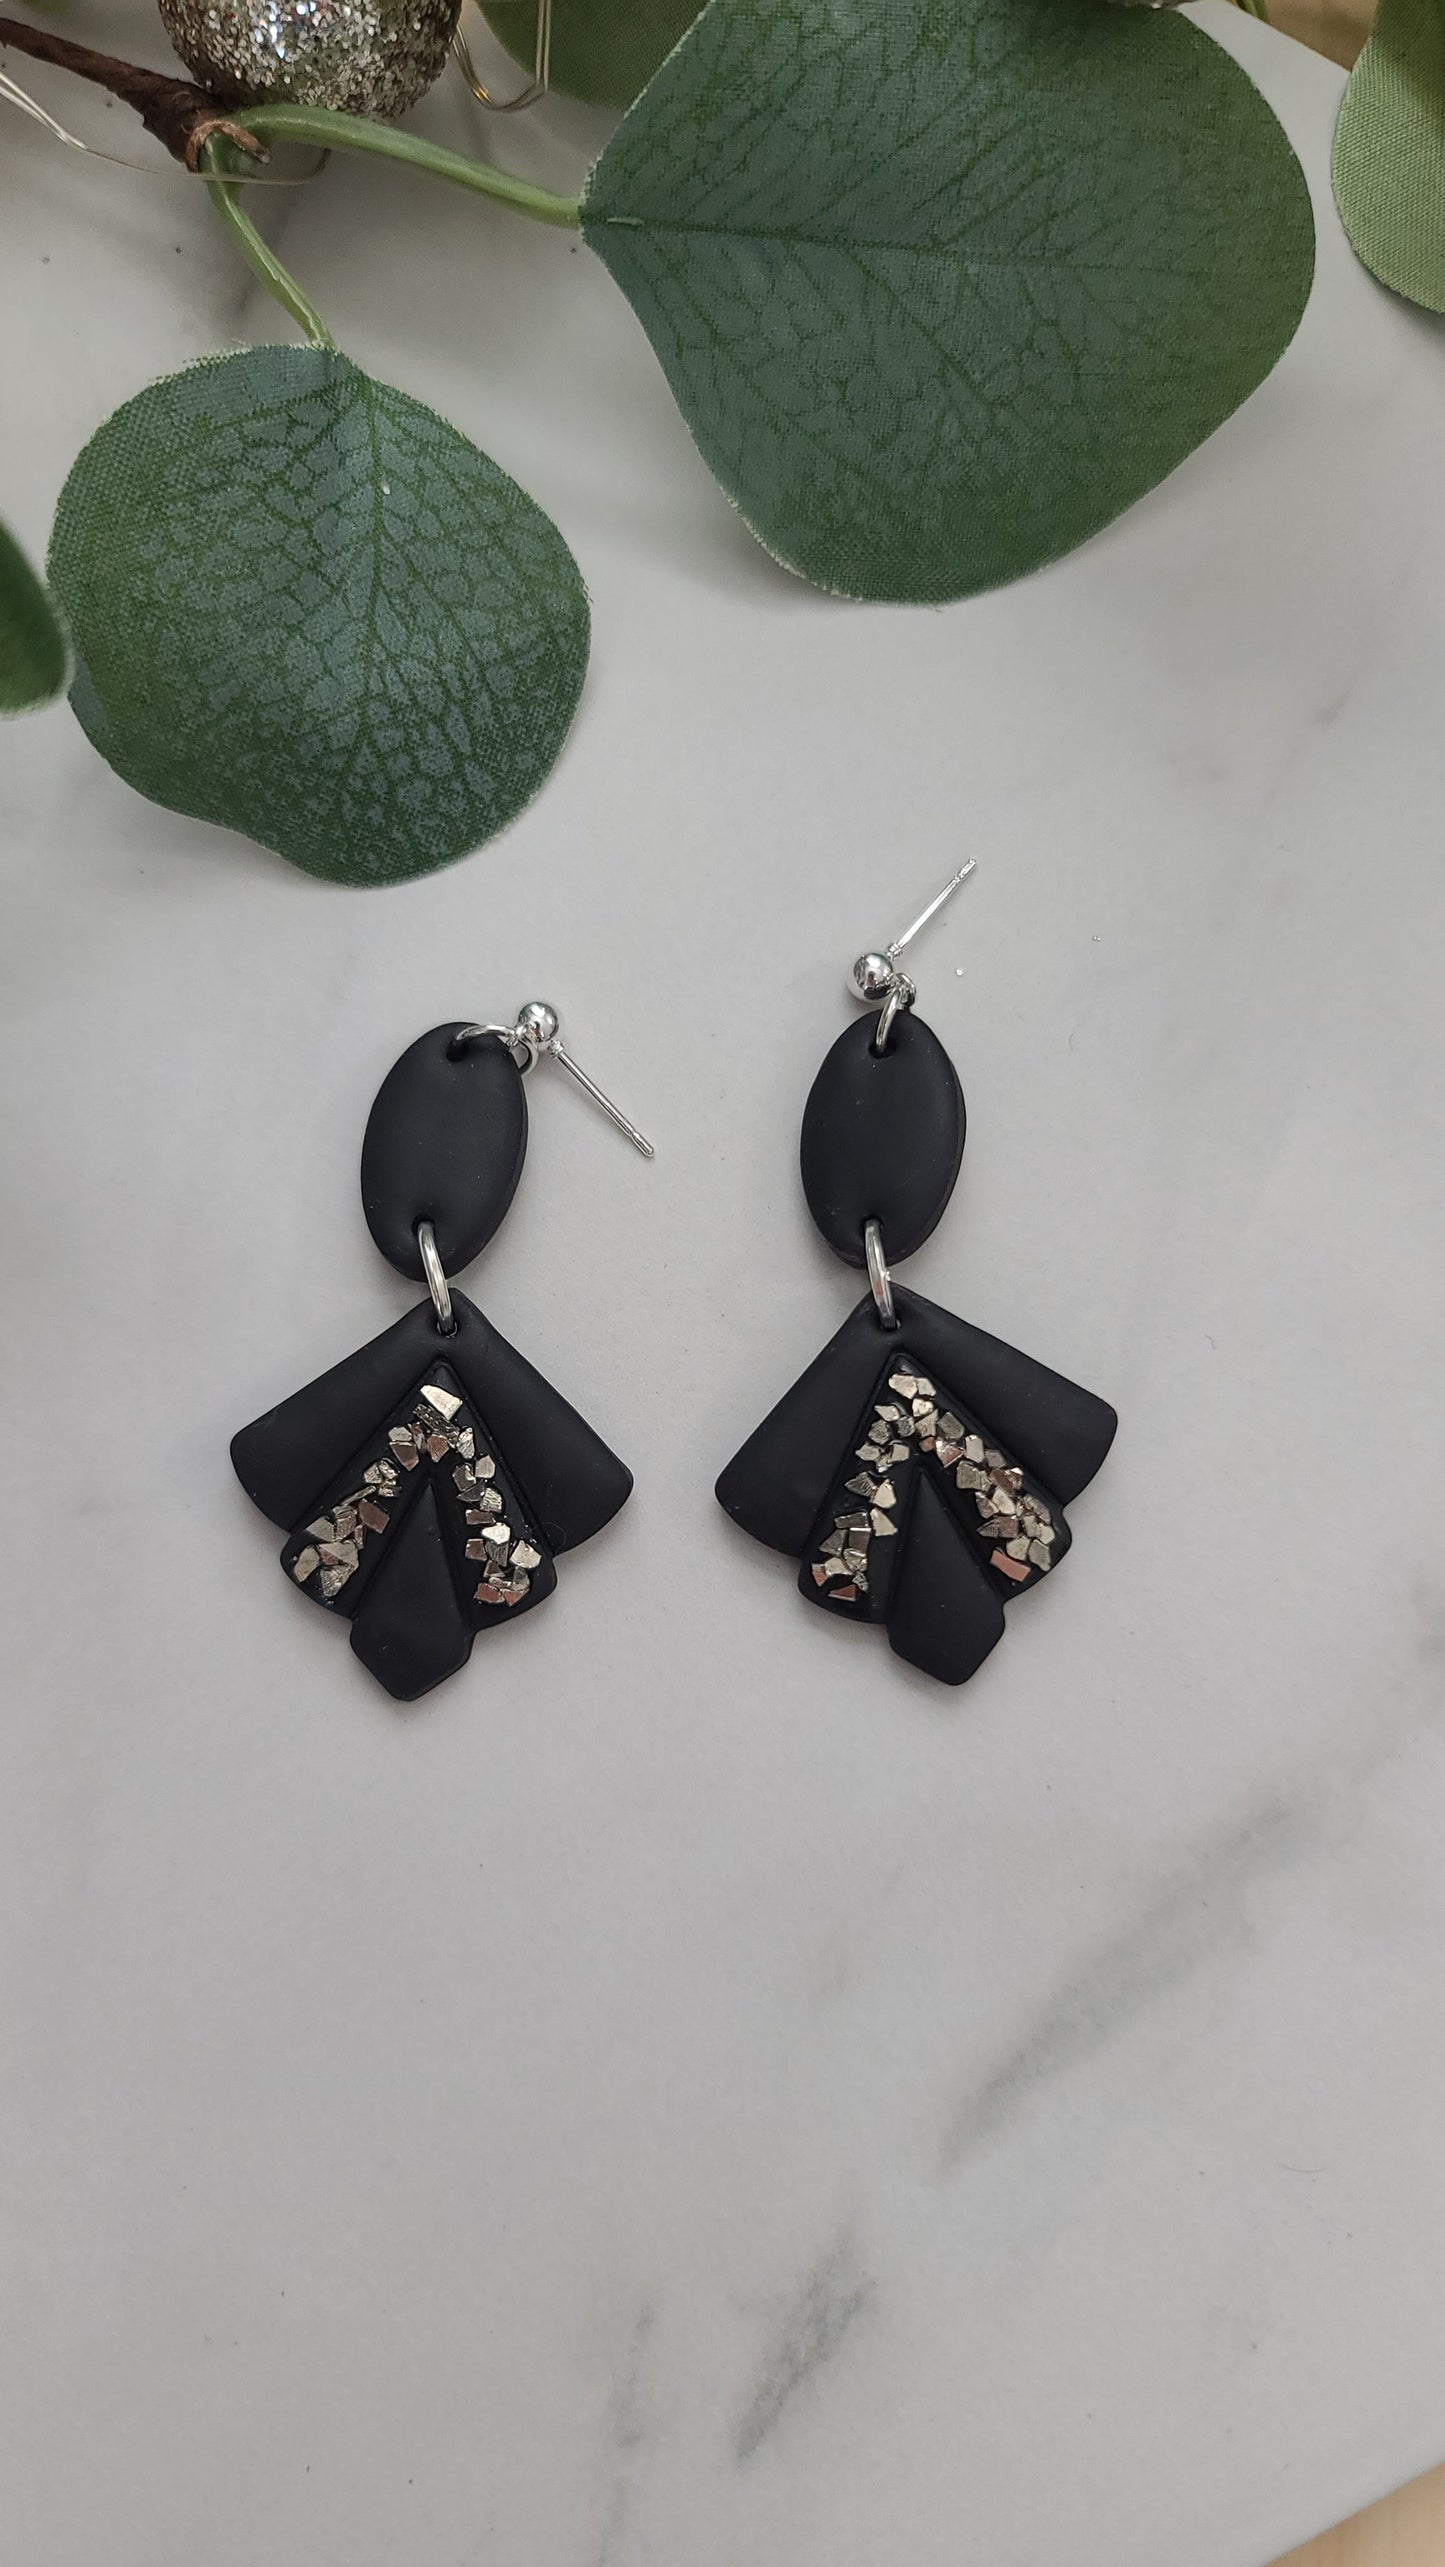 Black and Silver dangle earrings